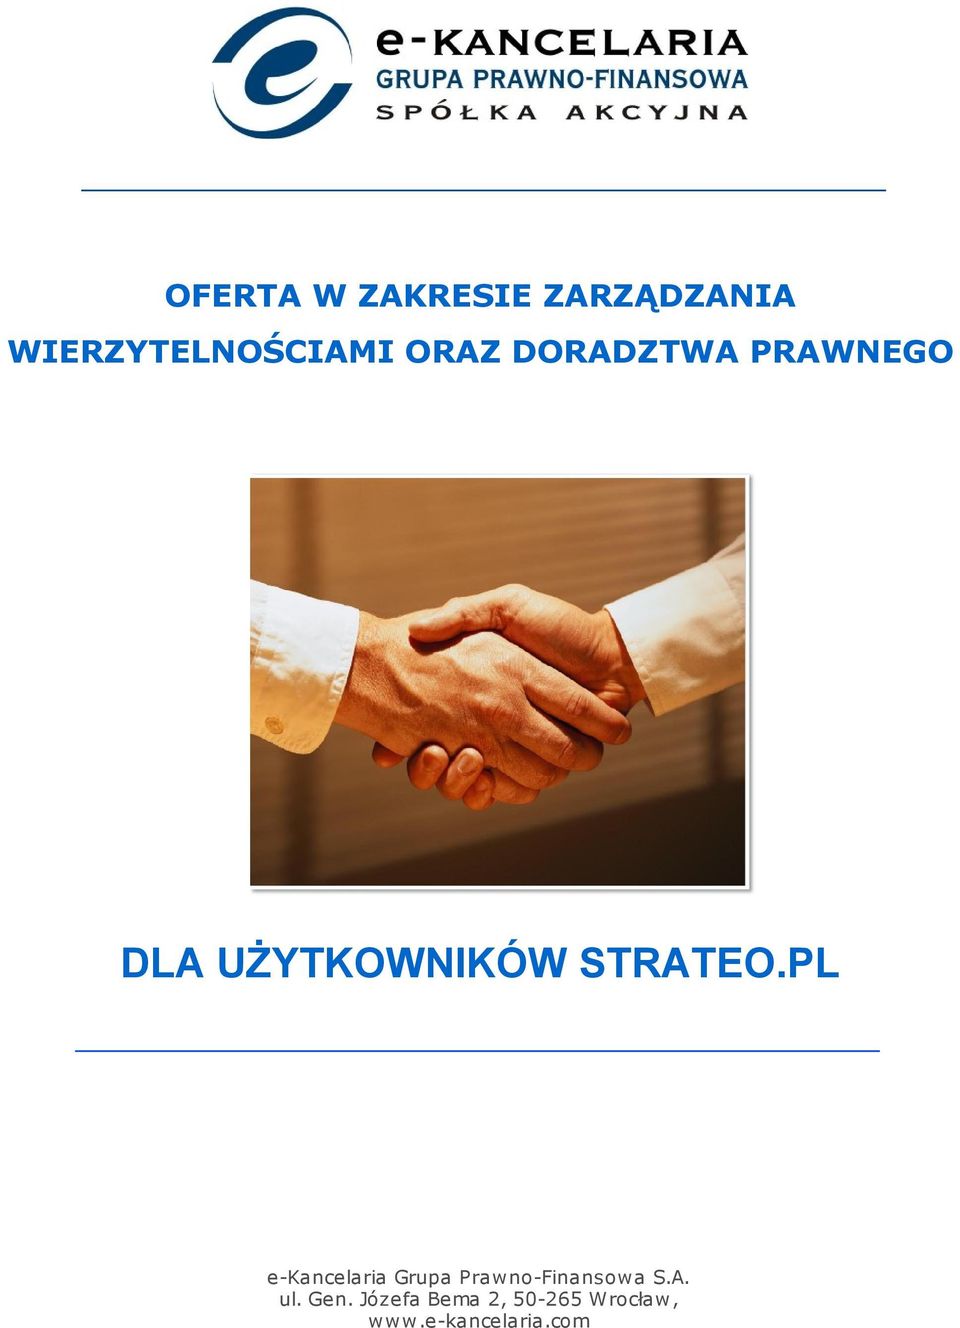 PL e-kancelaria Grupa Prawno-Finansowa S.A. ul.